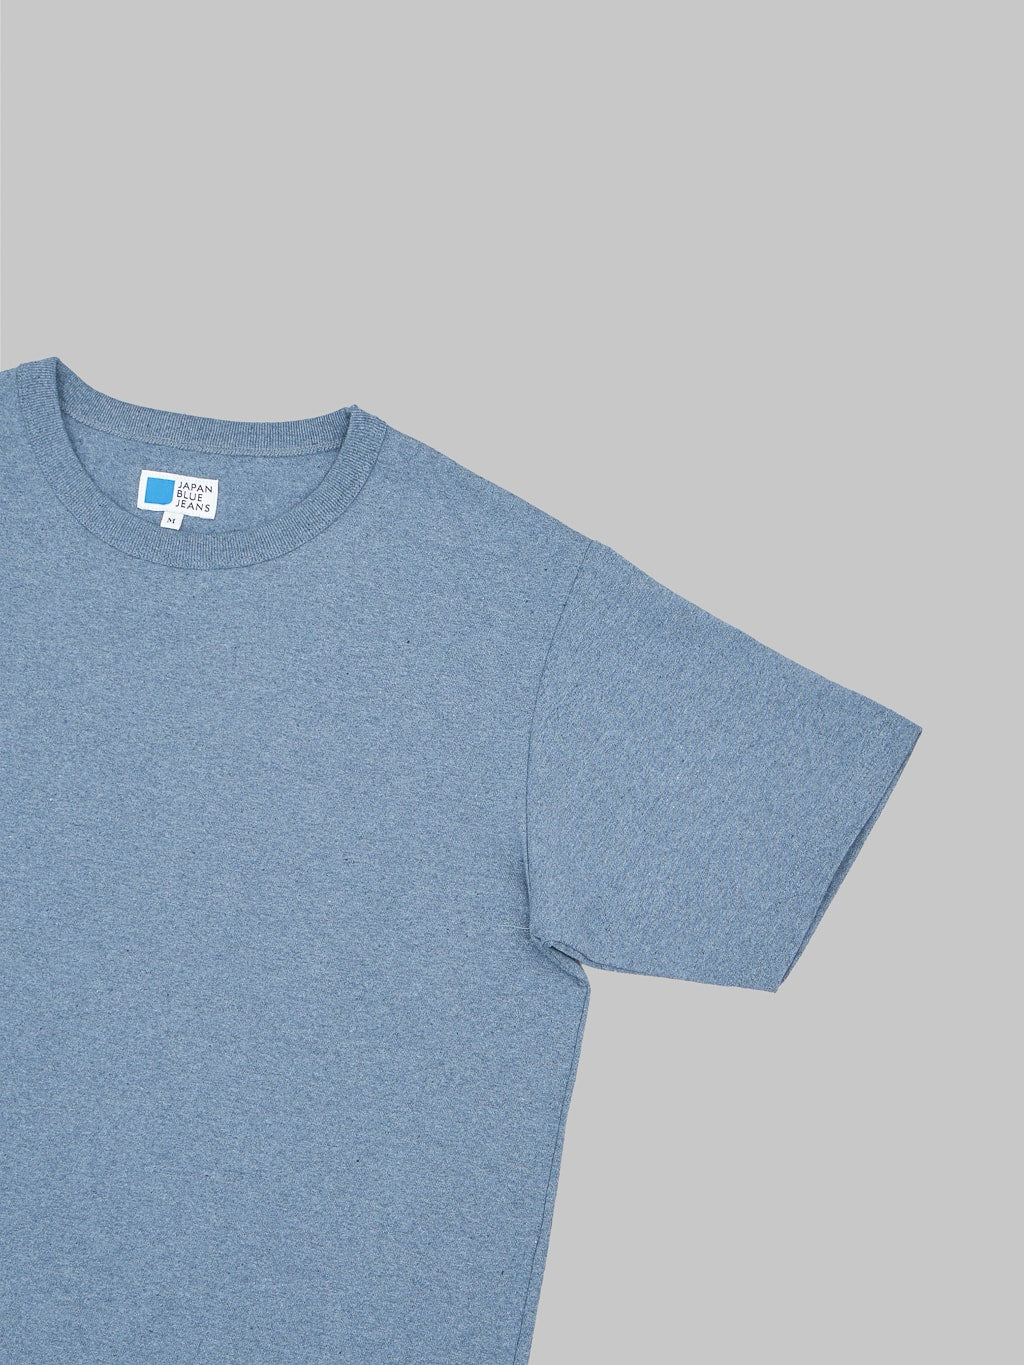 Japan Blue Recycled Denim Tshirt mid Indigo short sleeve